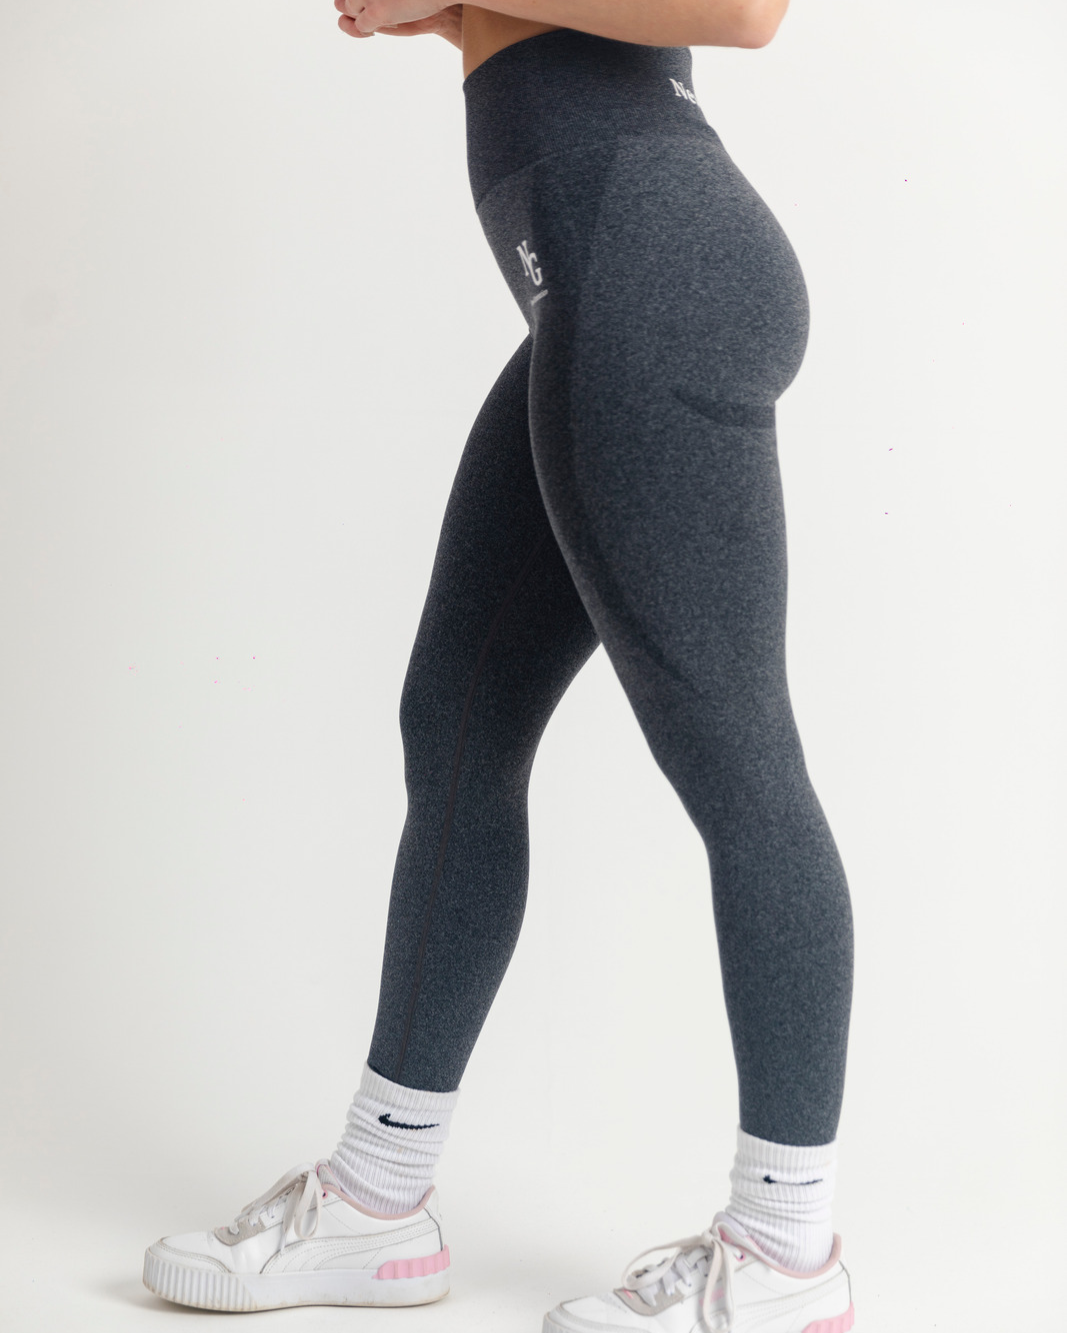 Gen 1 ladies charcoal grey leggings – New Generation Fitness